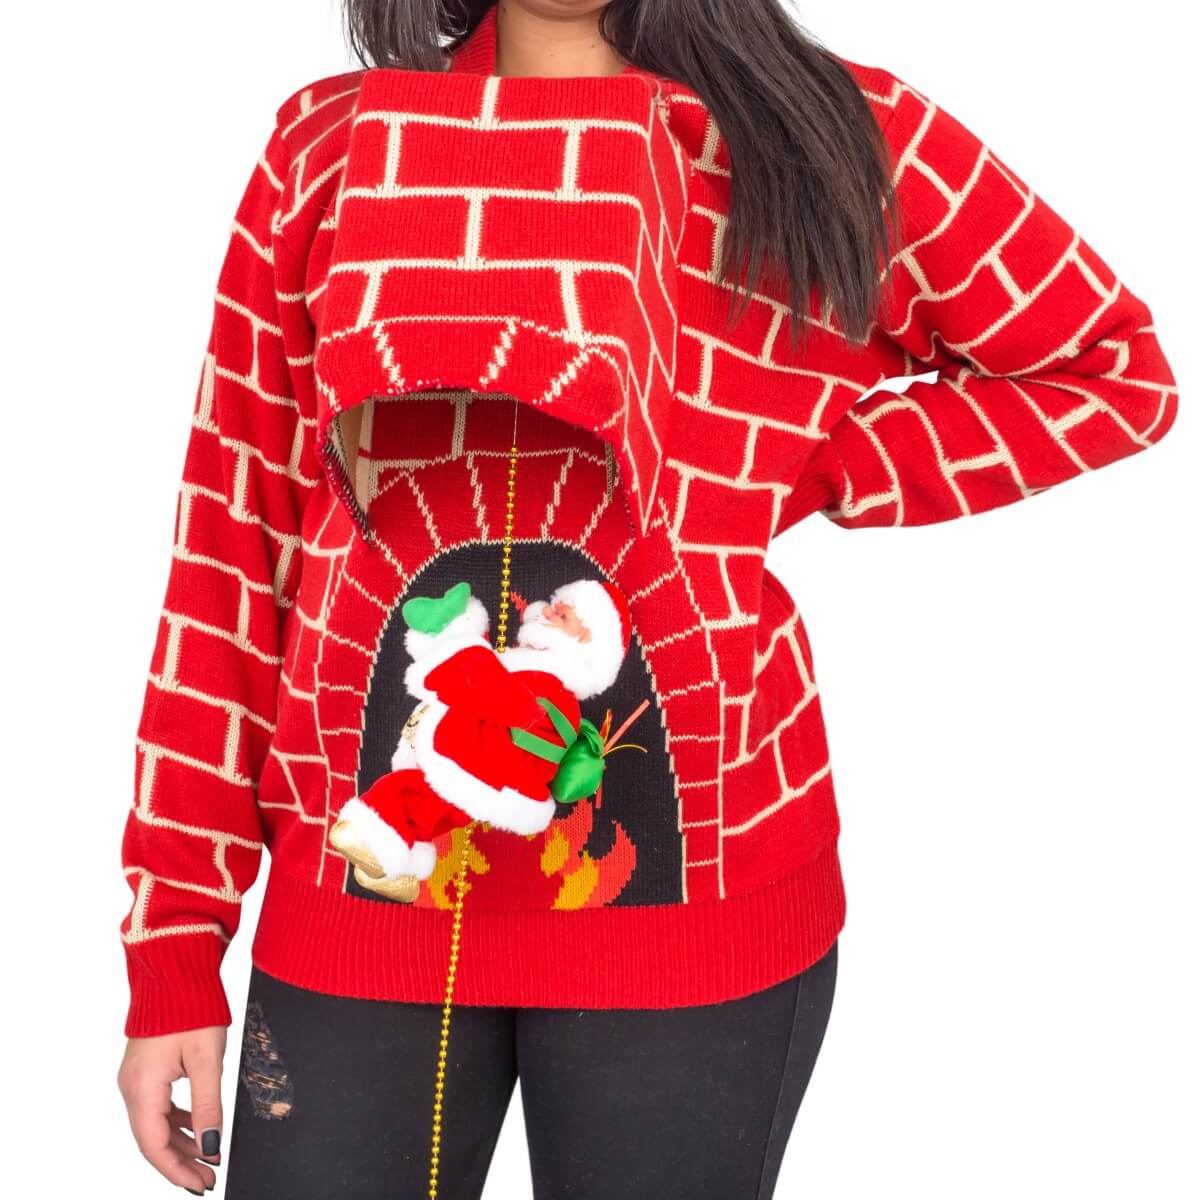 Ugly Christmas Sweaters